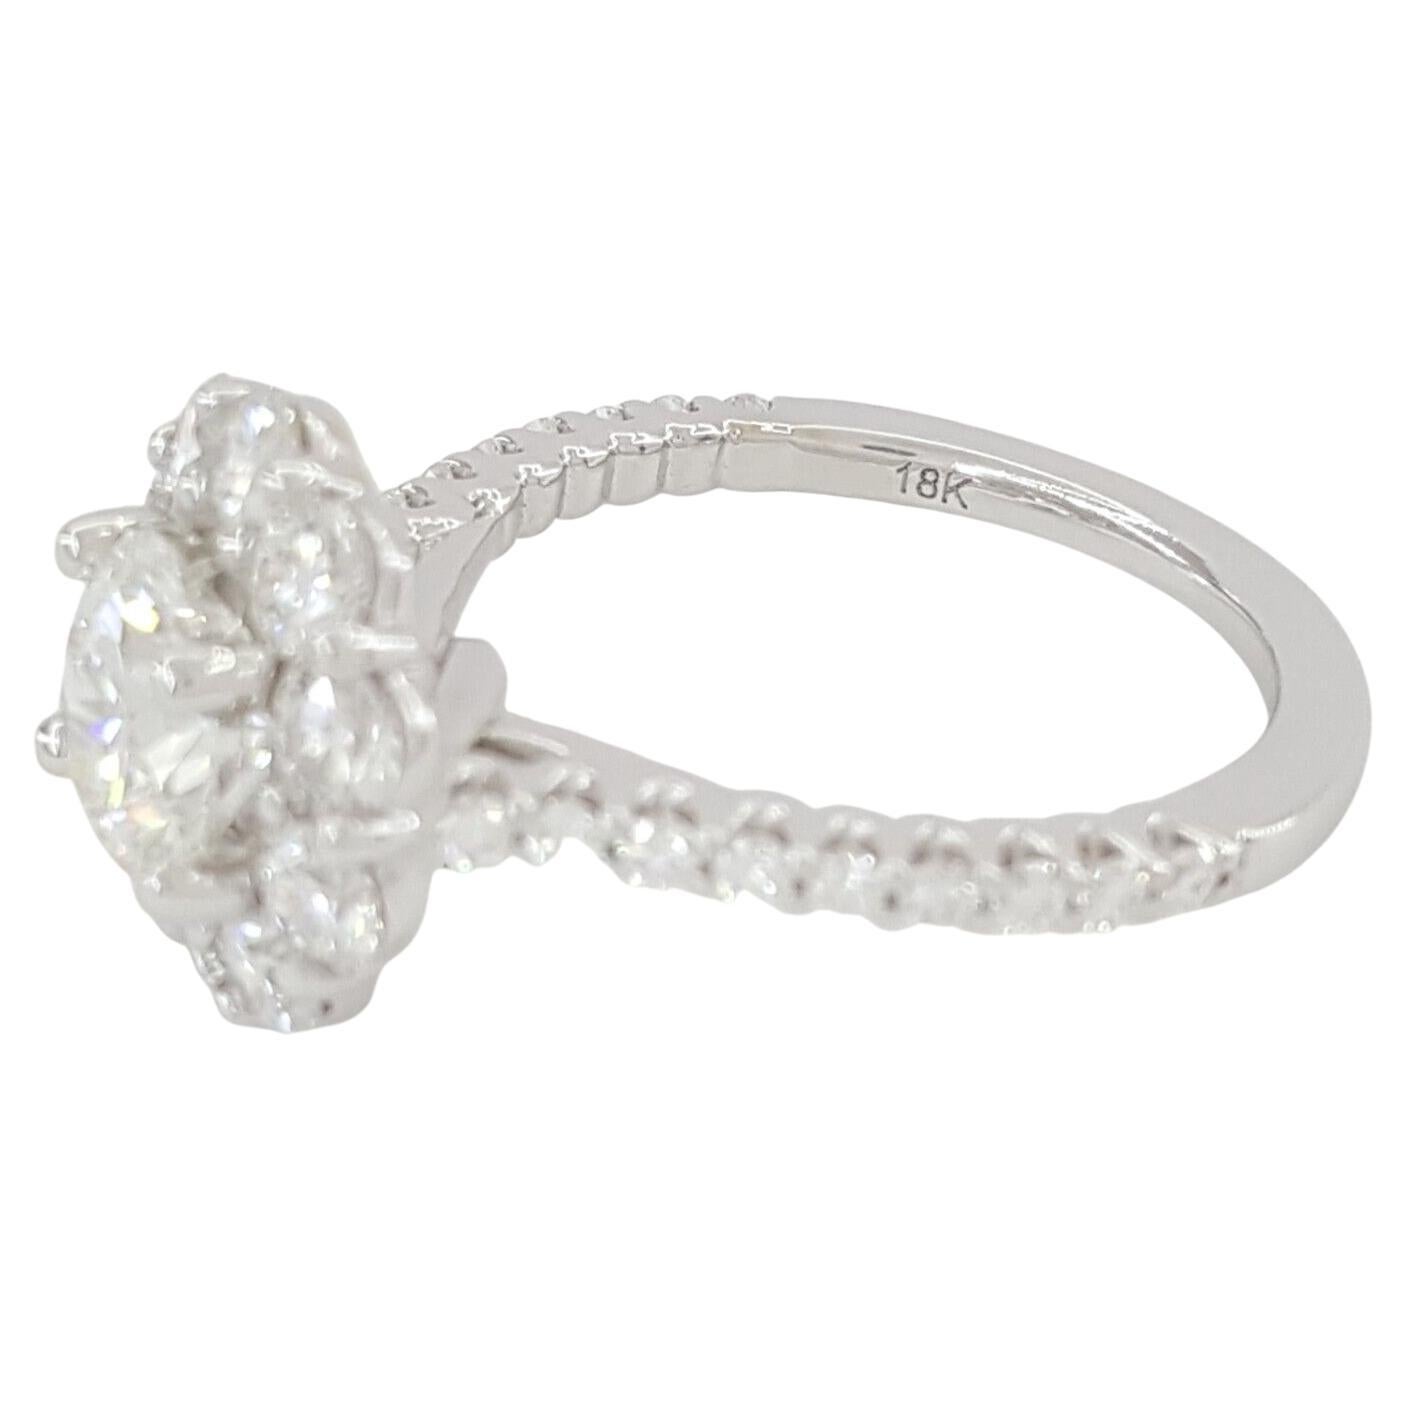 Round Brilliant Cut Halo Diamond 18k White Gold Engagement Ring GIA. 

